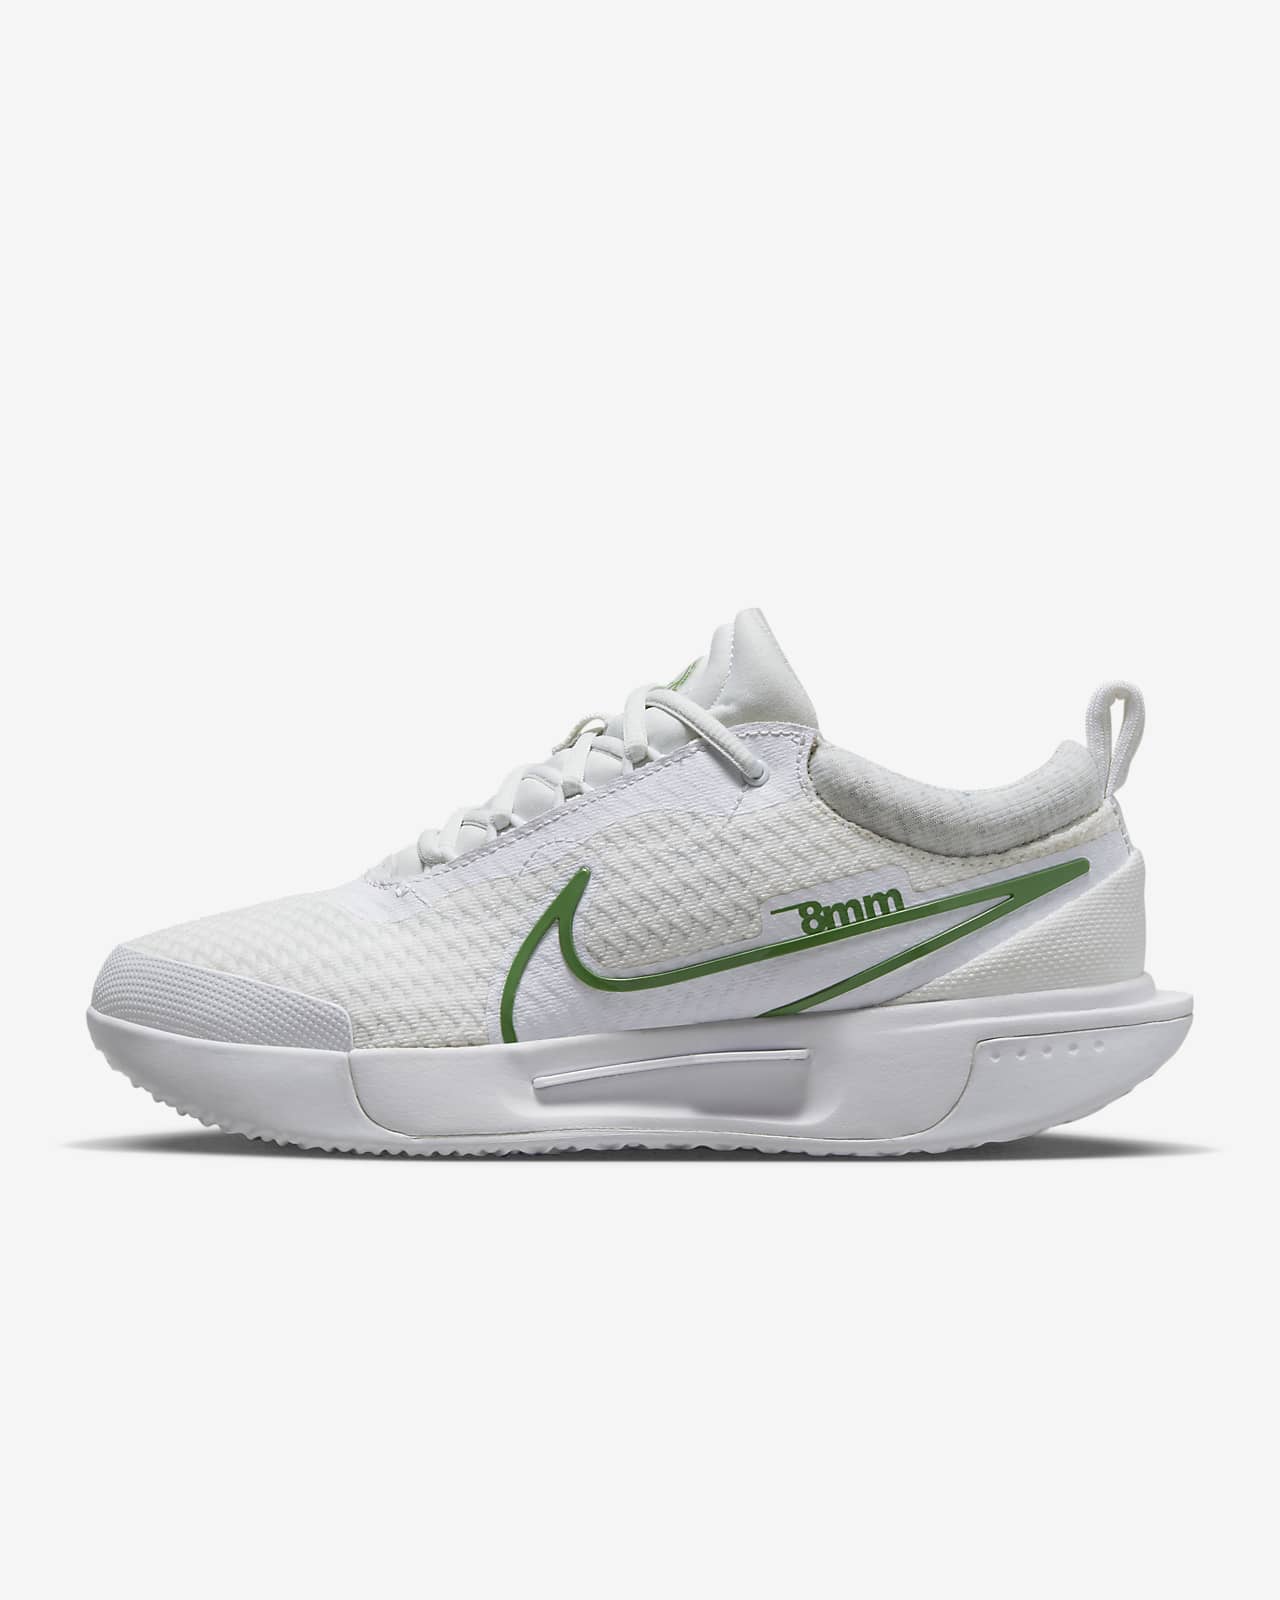 NikeCourt Air Zoom Pro Women's Hard Court Tennis Shoes